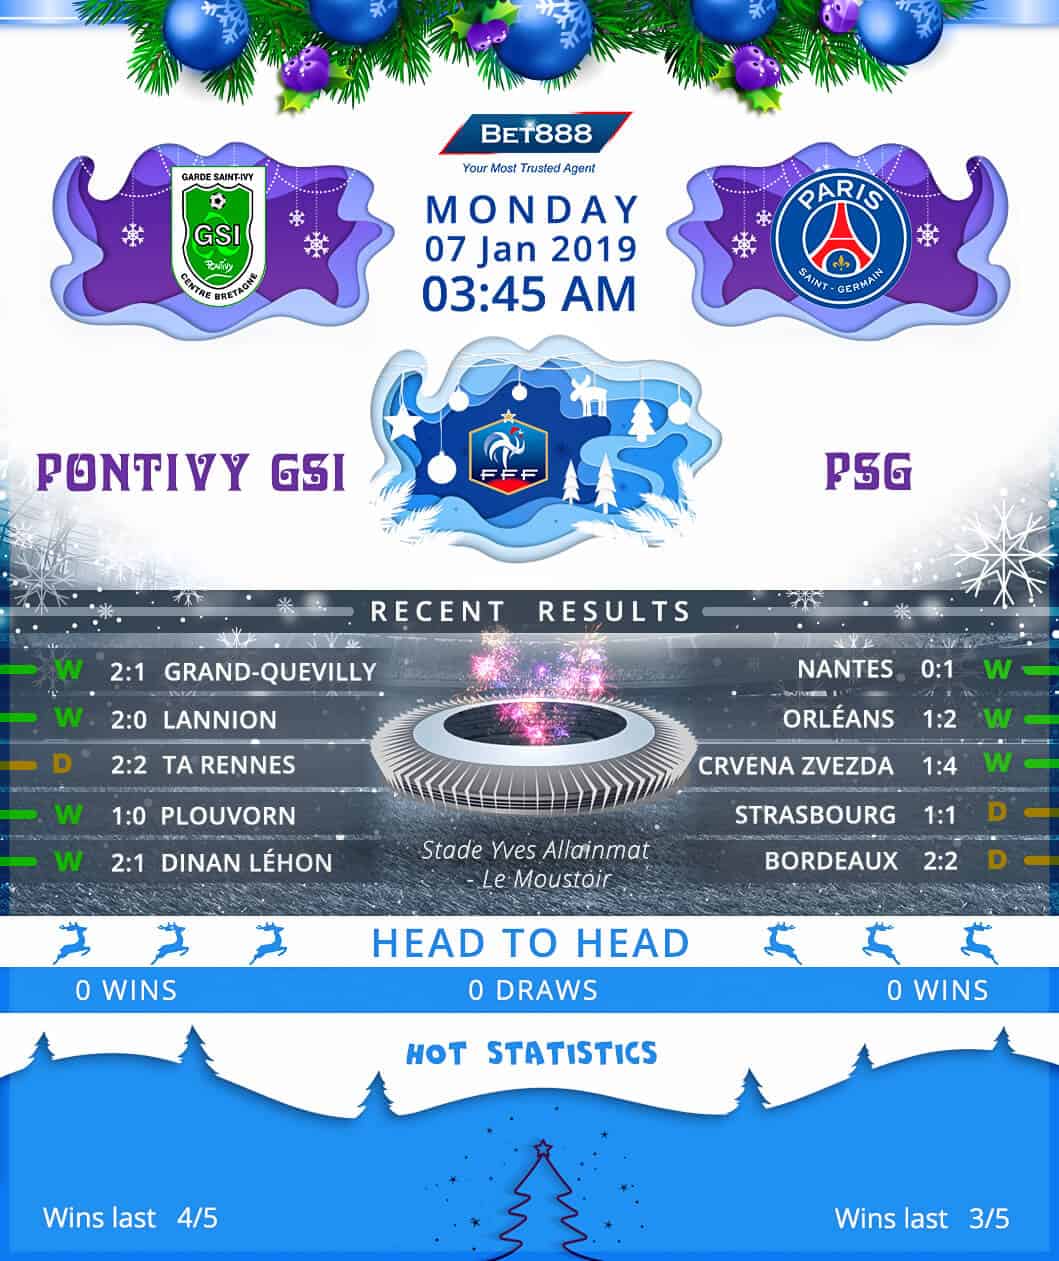 GSI Pontivy vs Paris Saint-Germain 07/01/19